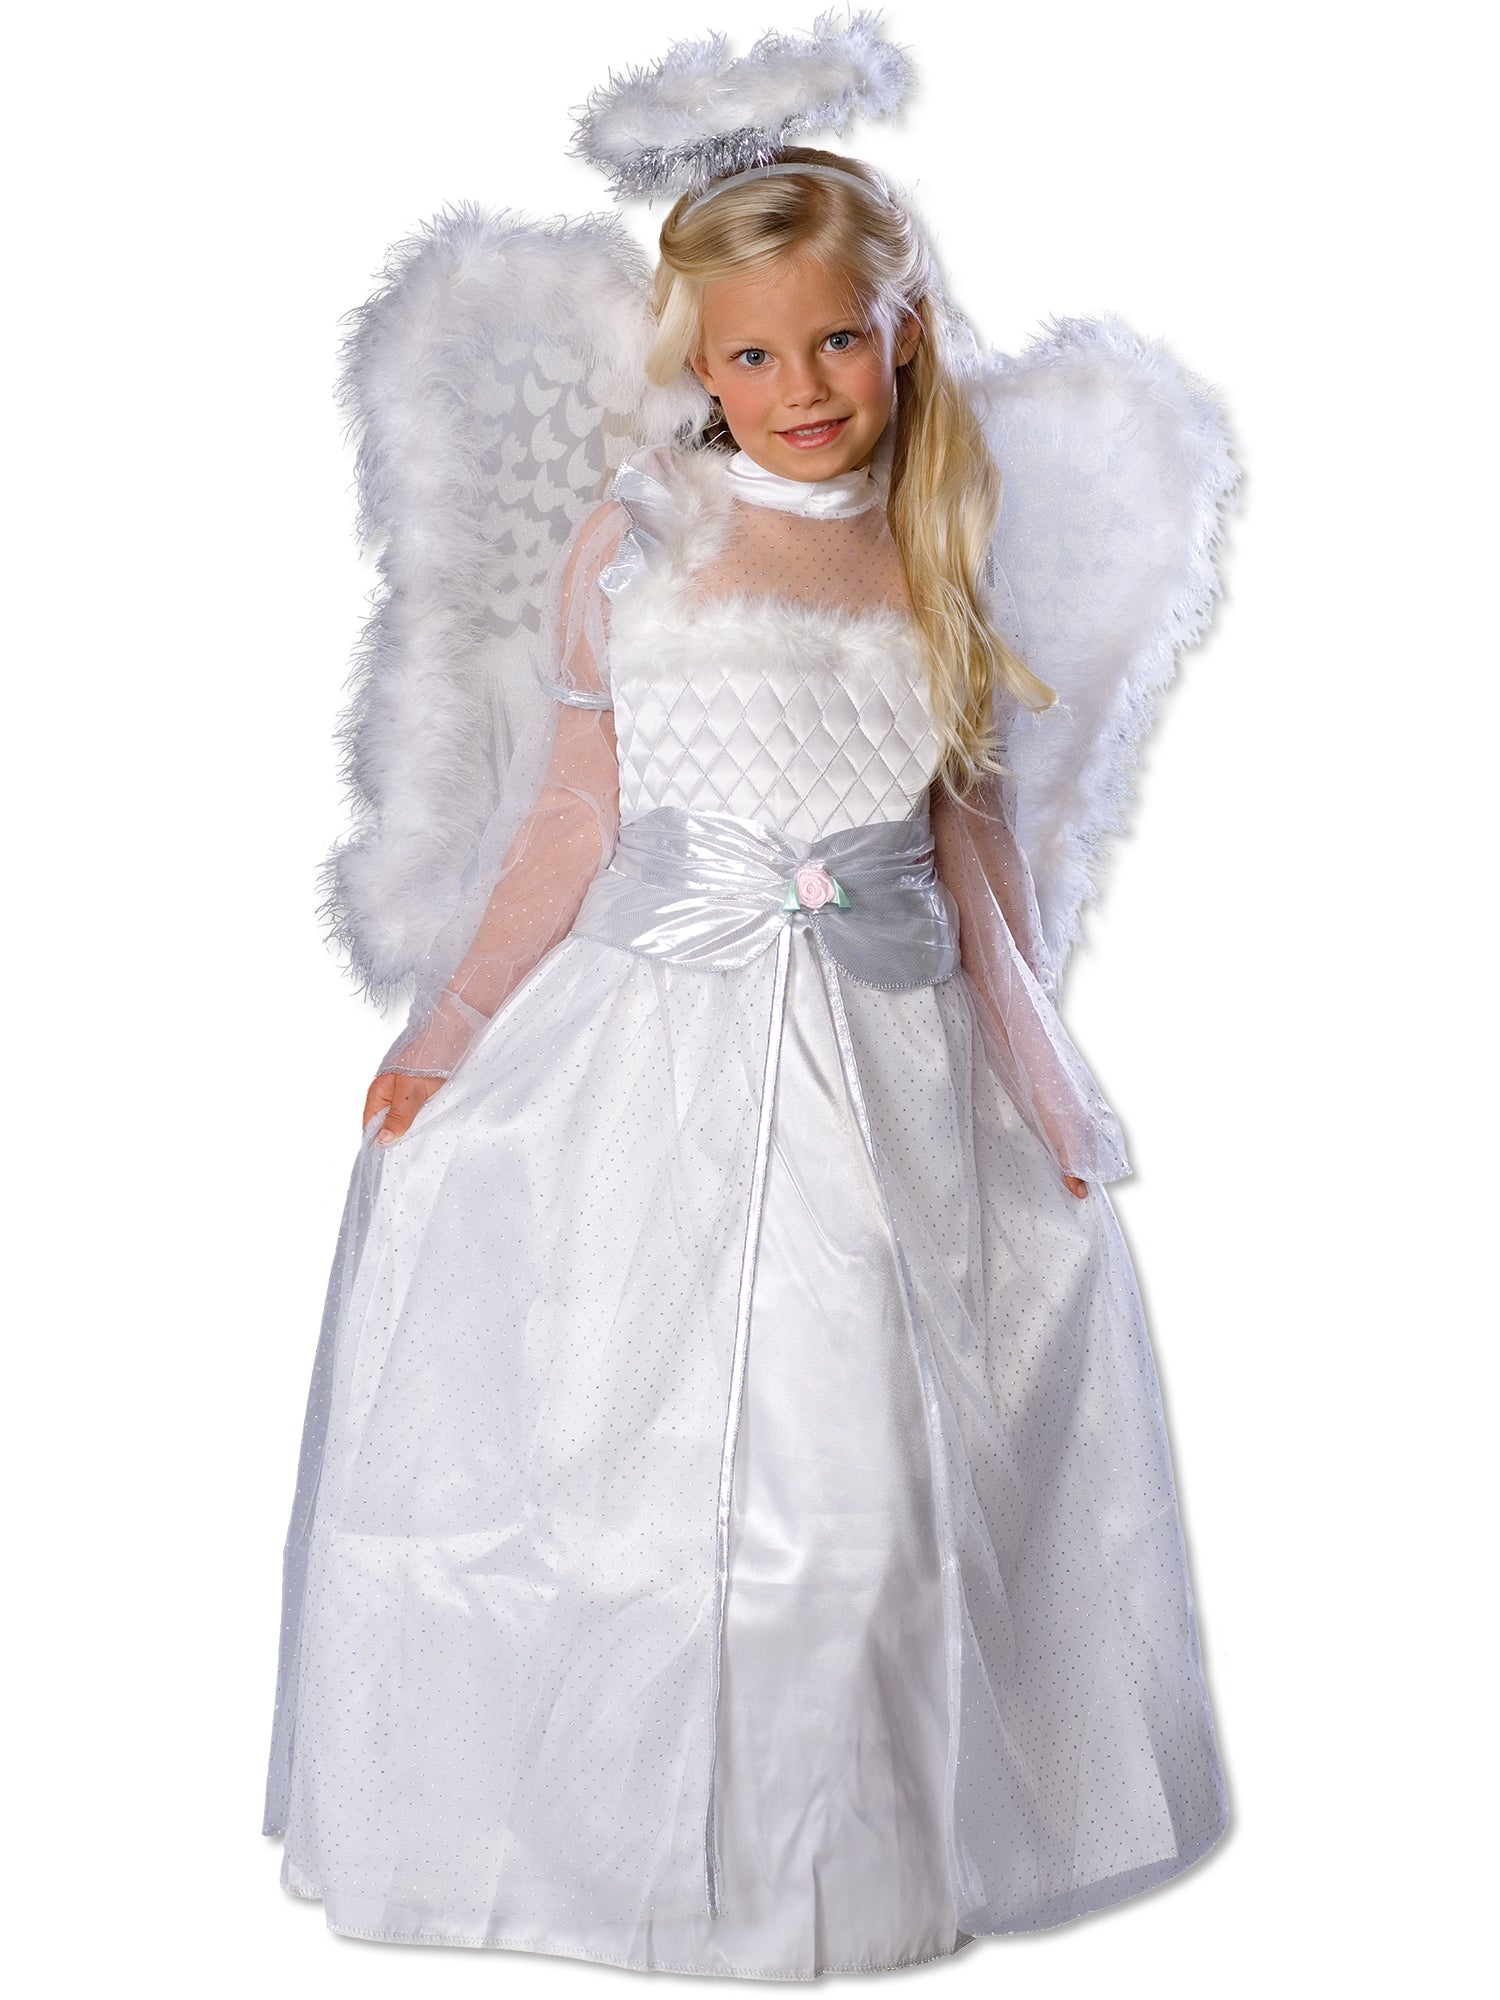 Kids Rosebud Angel Costume - costumes.com